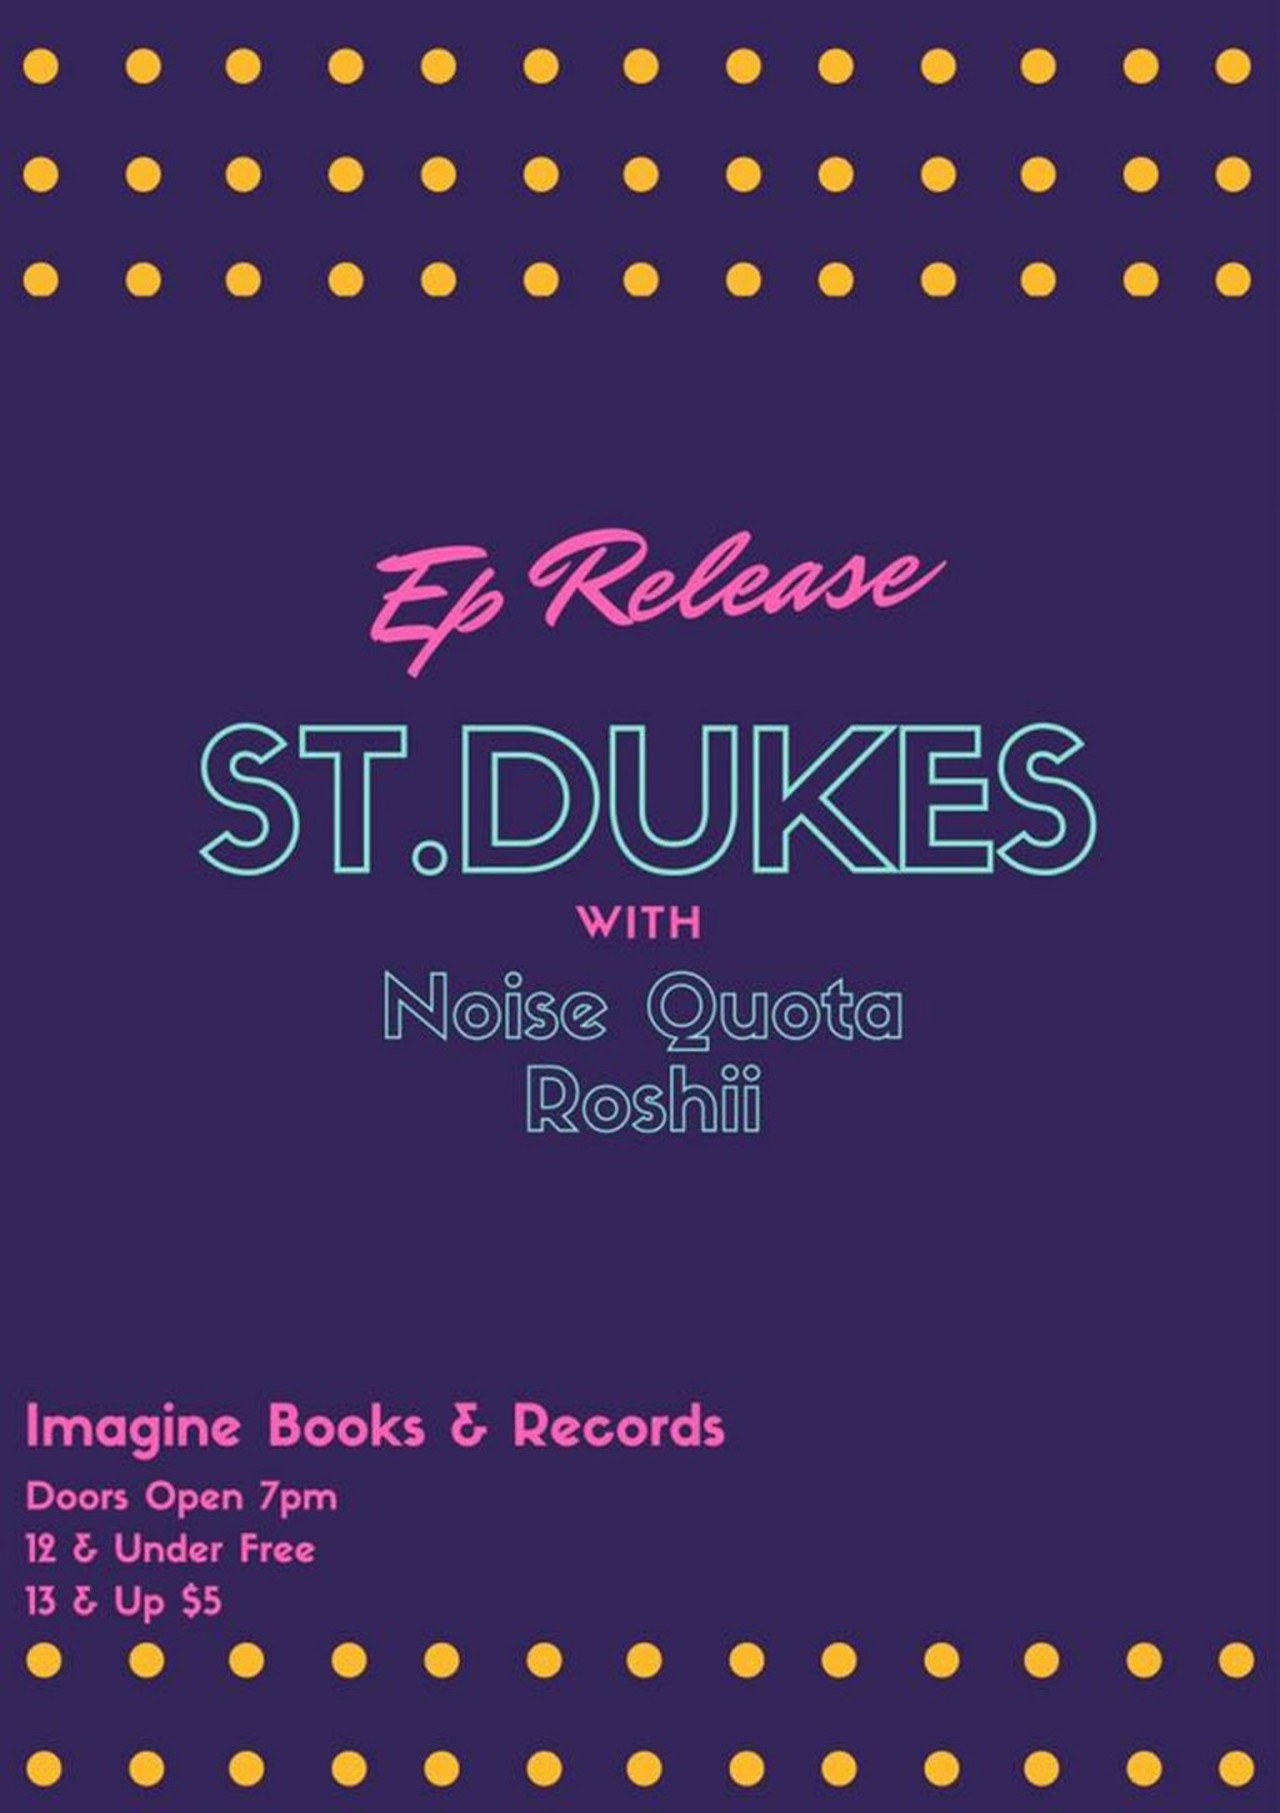 St. Dukes EP Release 
Fri., July 21, 7 p.m., Imagine Books & Records, $5.